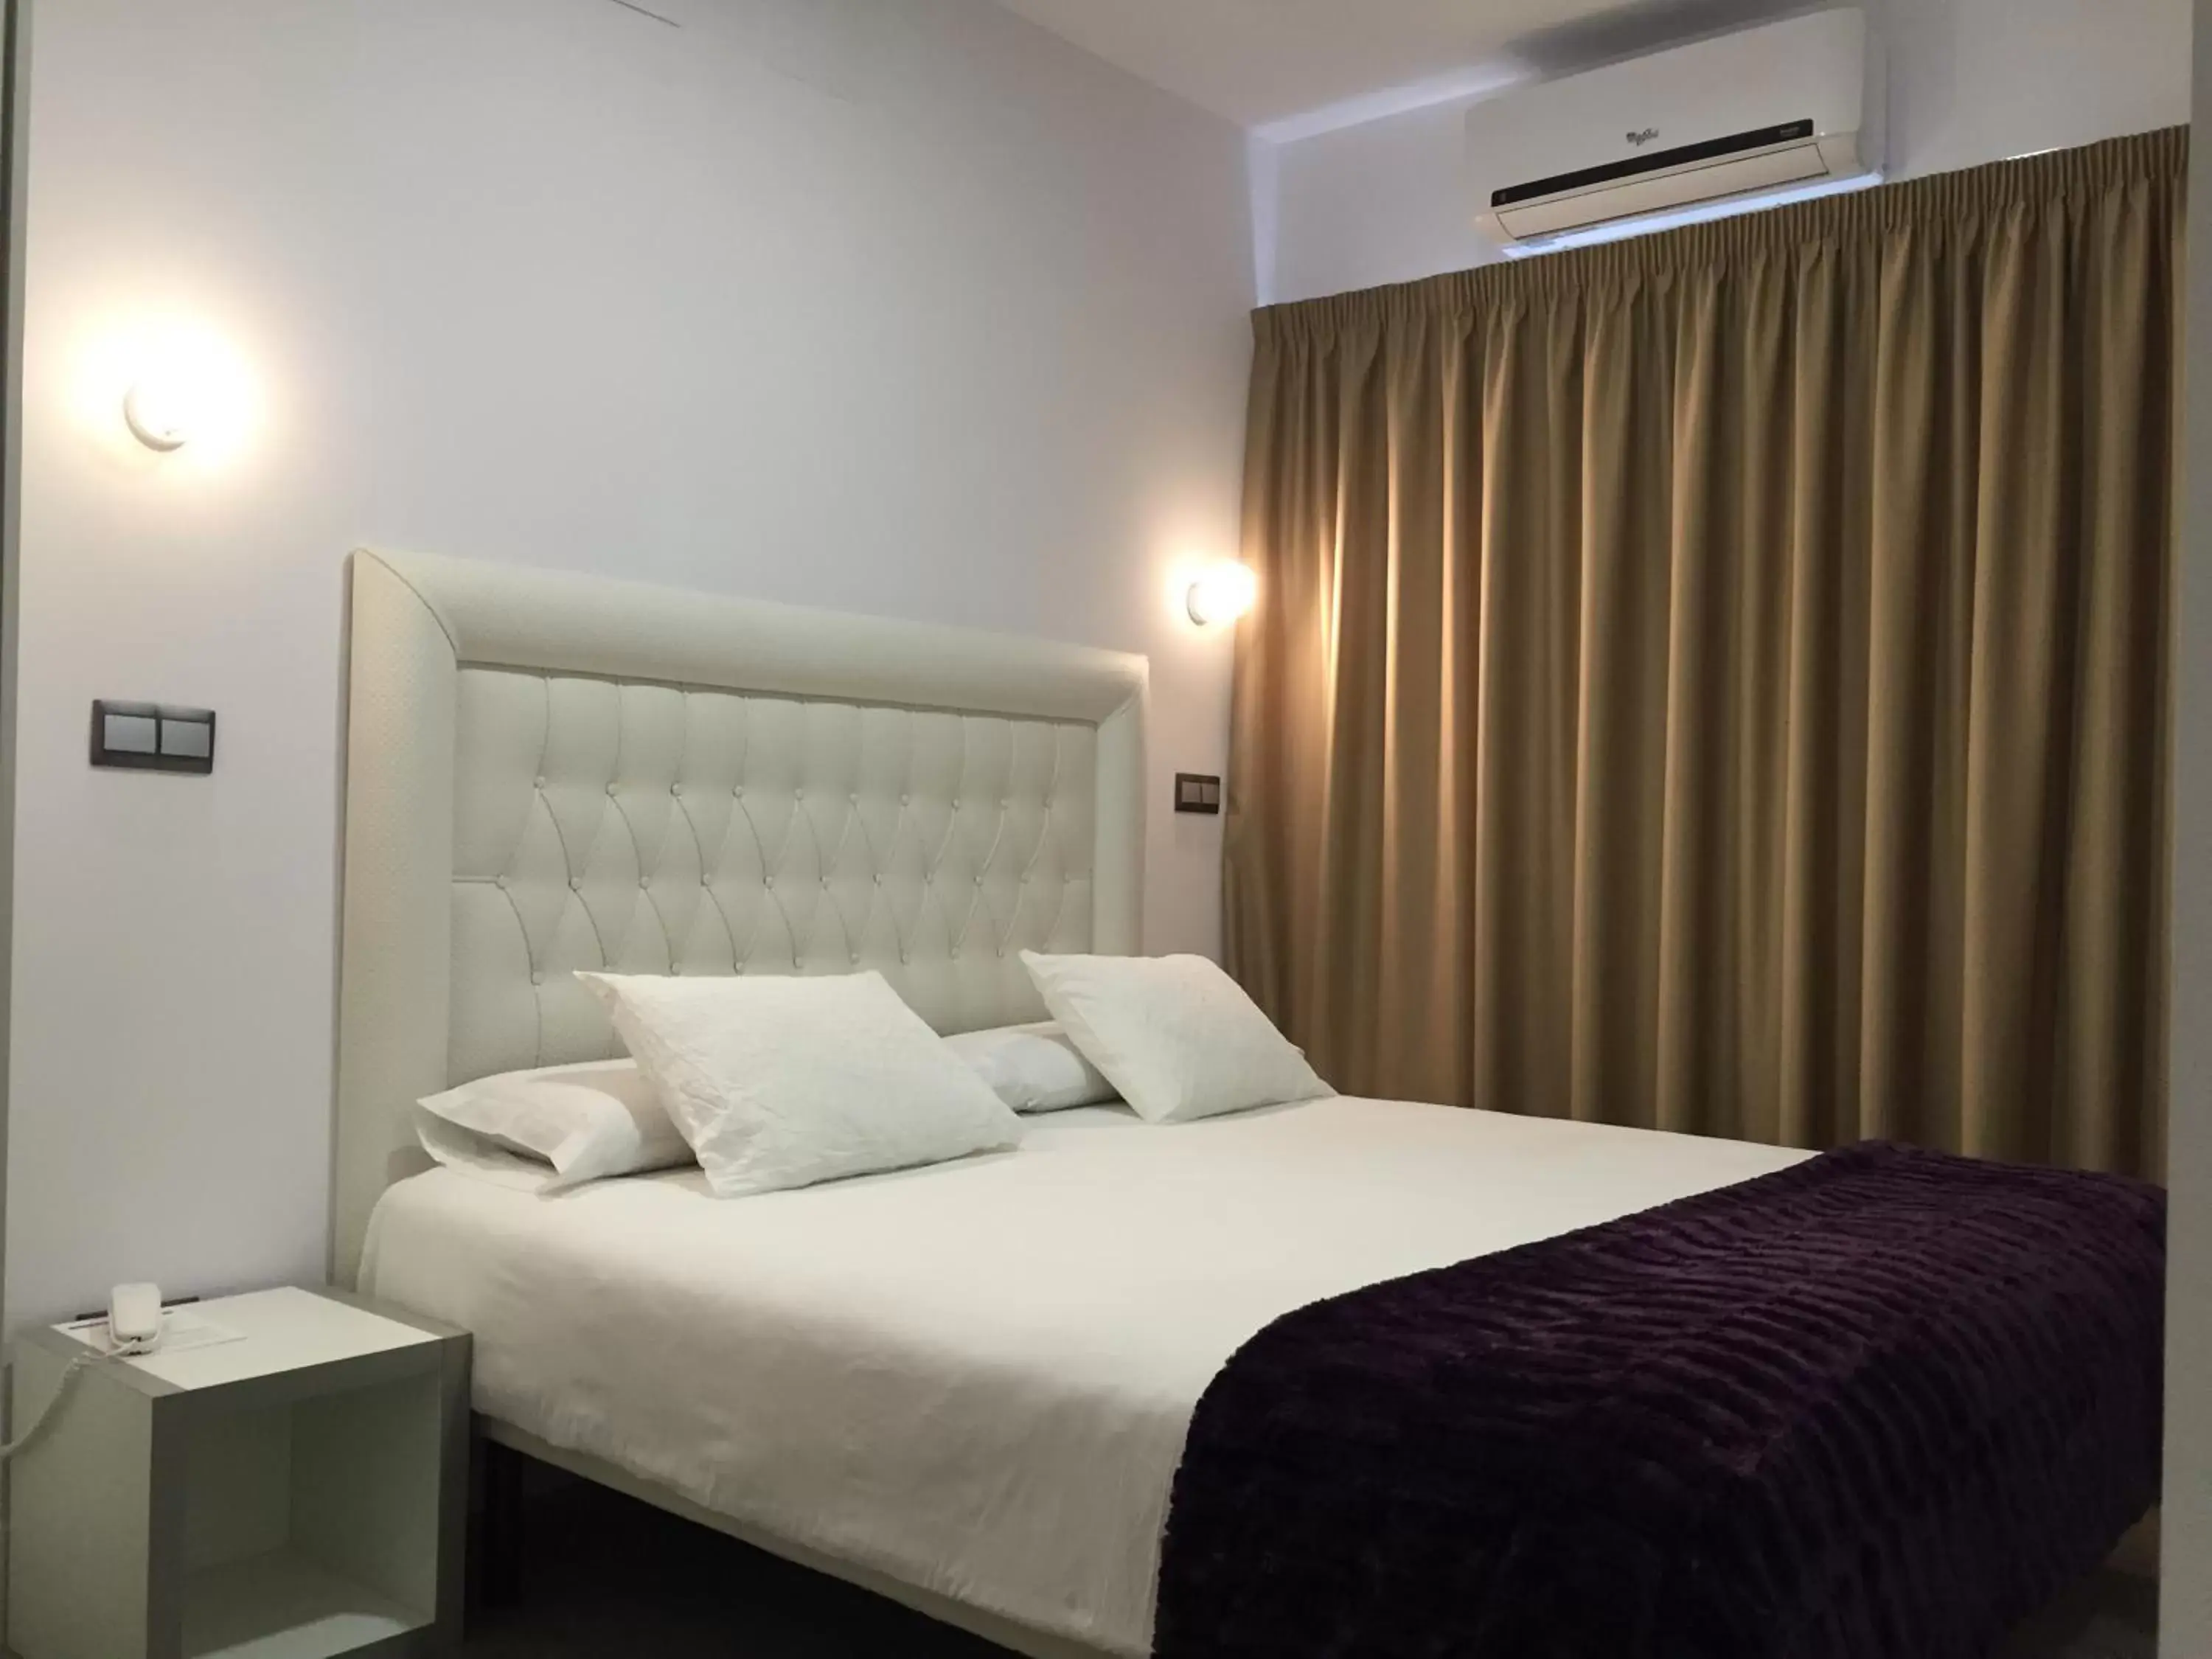 Bed, Room Photo in Hotel Natursun